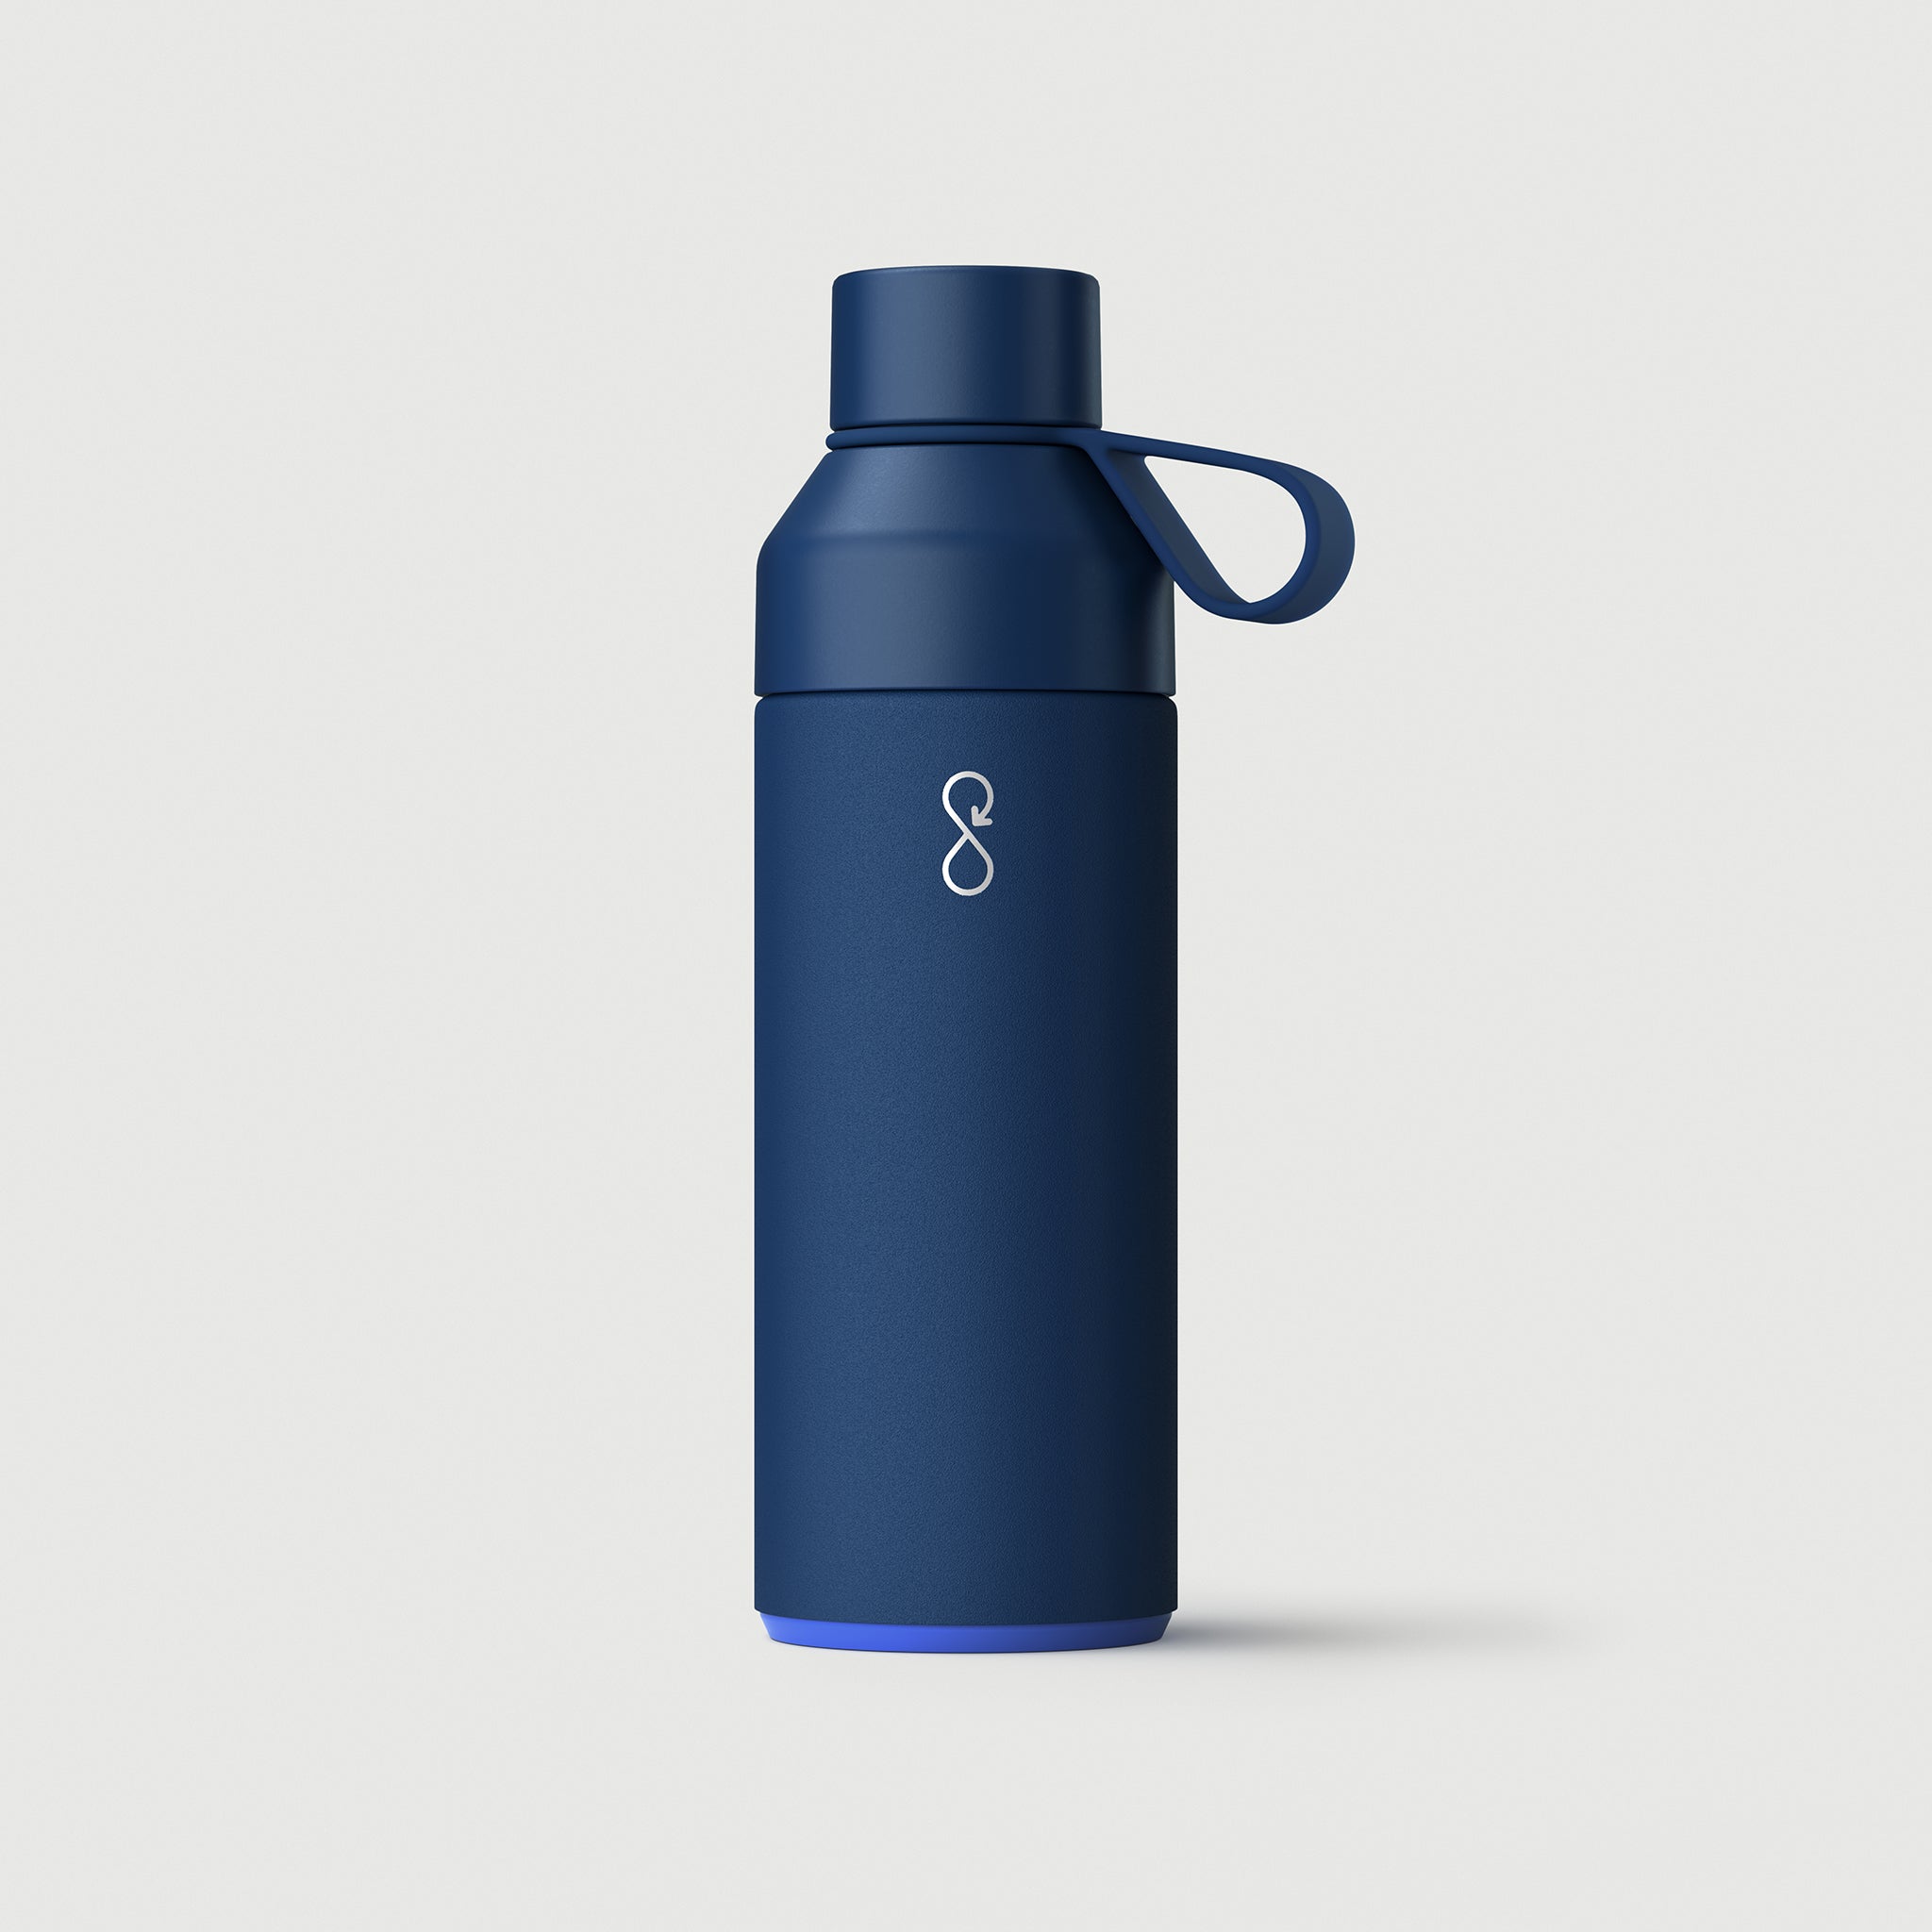 Product picture of Ocean Bottle - Ocean Blue (500ml)